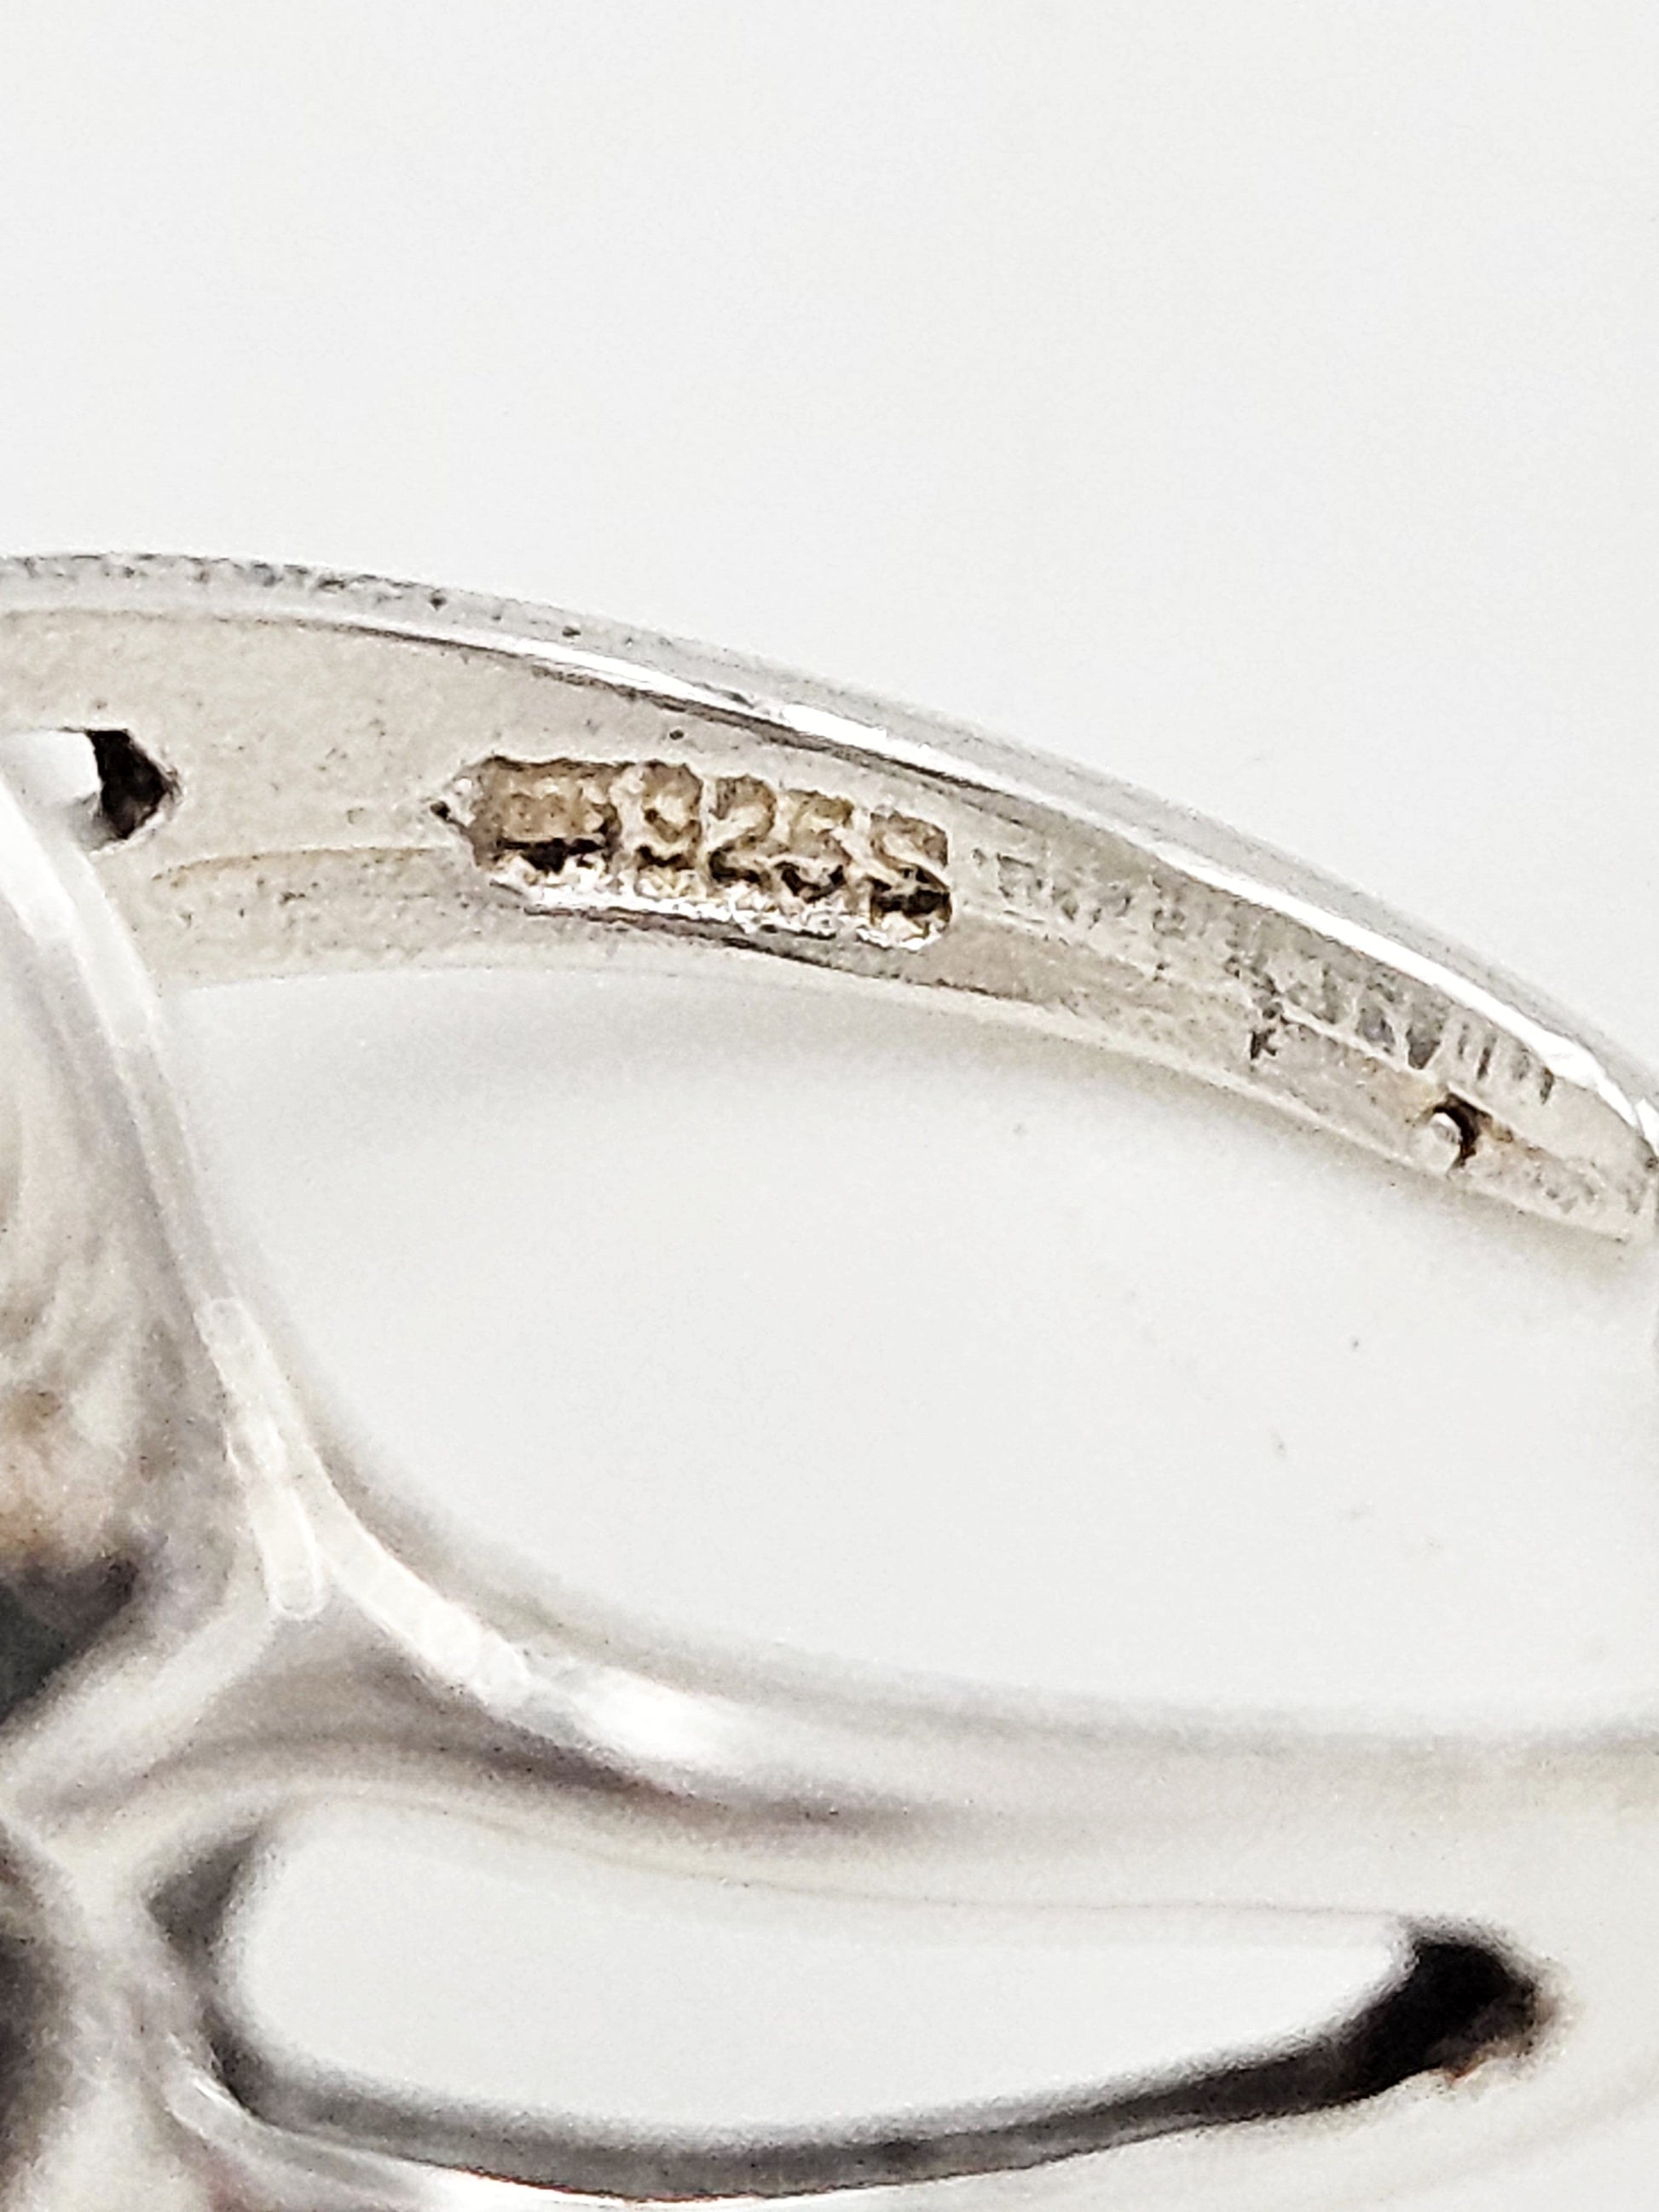 Norway Jewelry Designer Norway Sterling Modernist Brutalist Ring 1960s